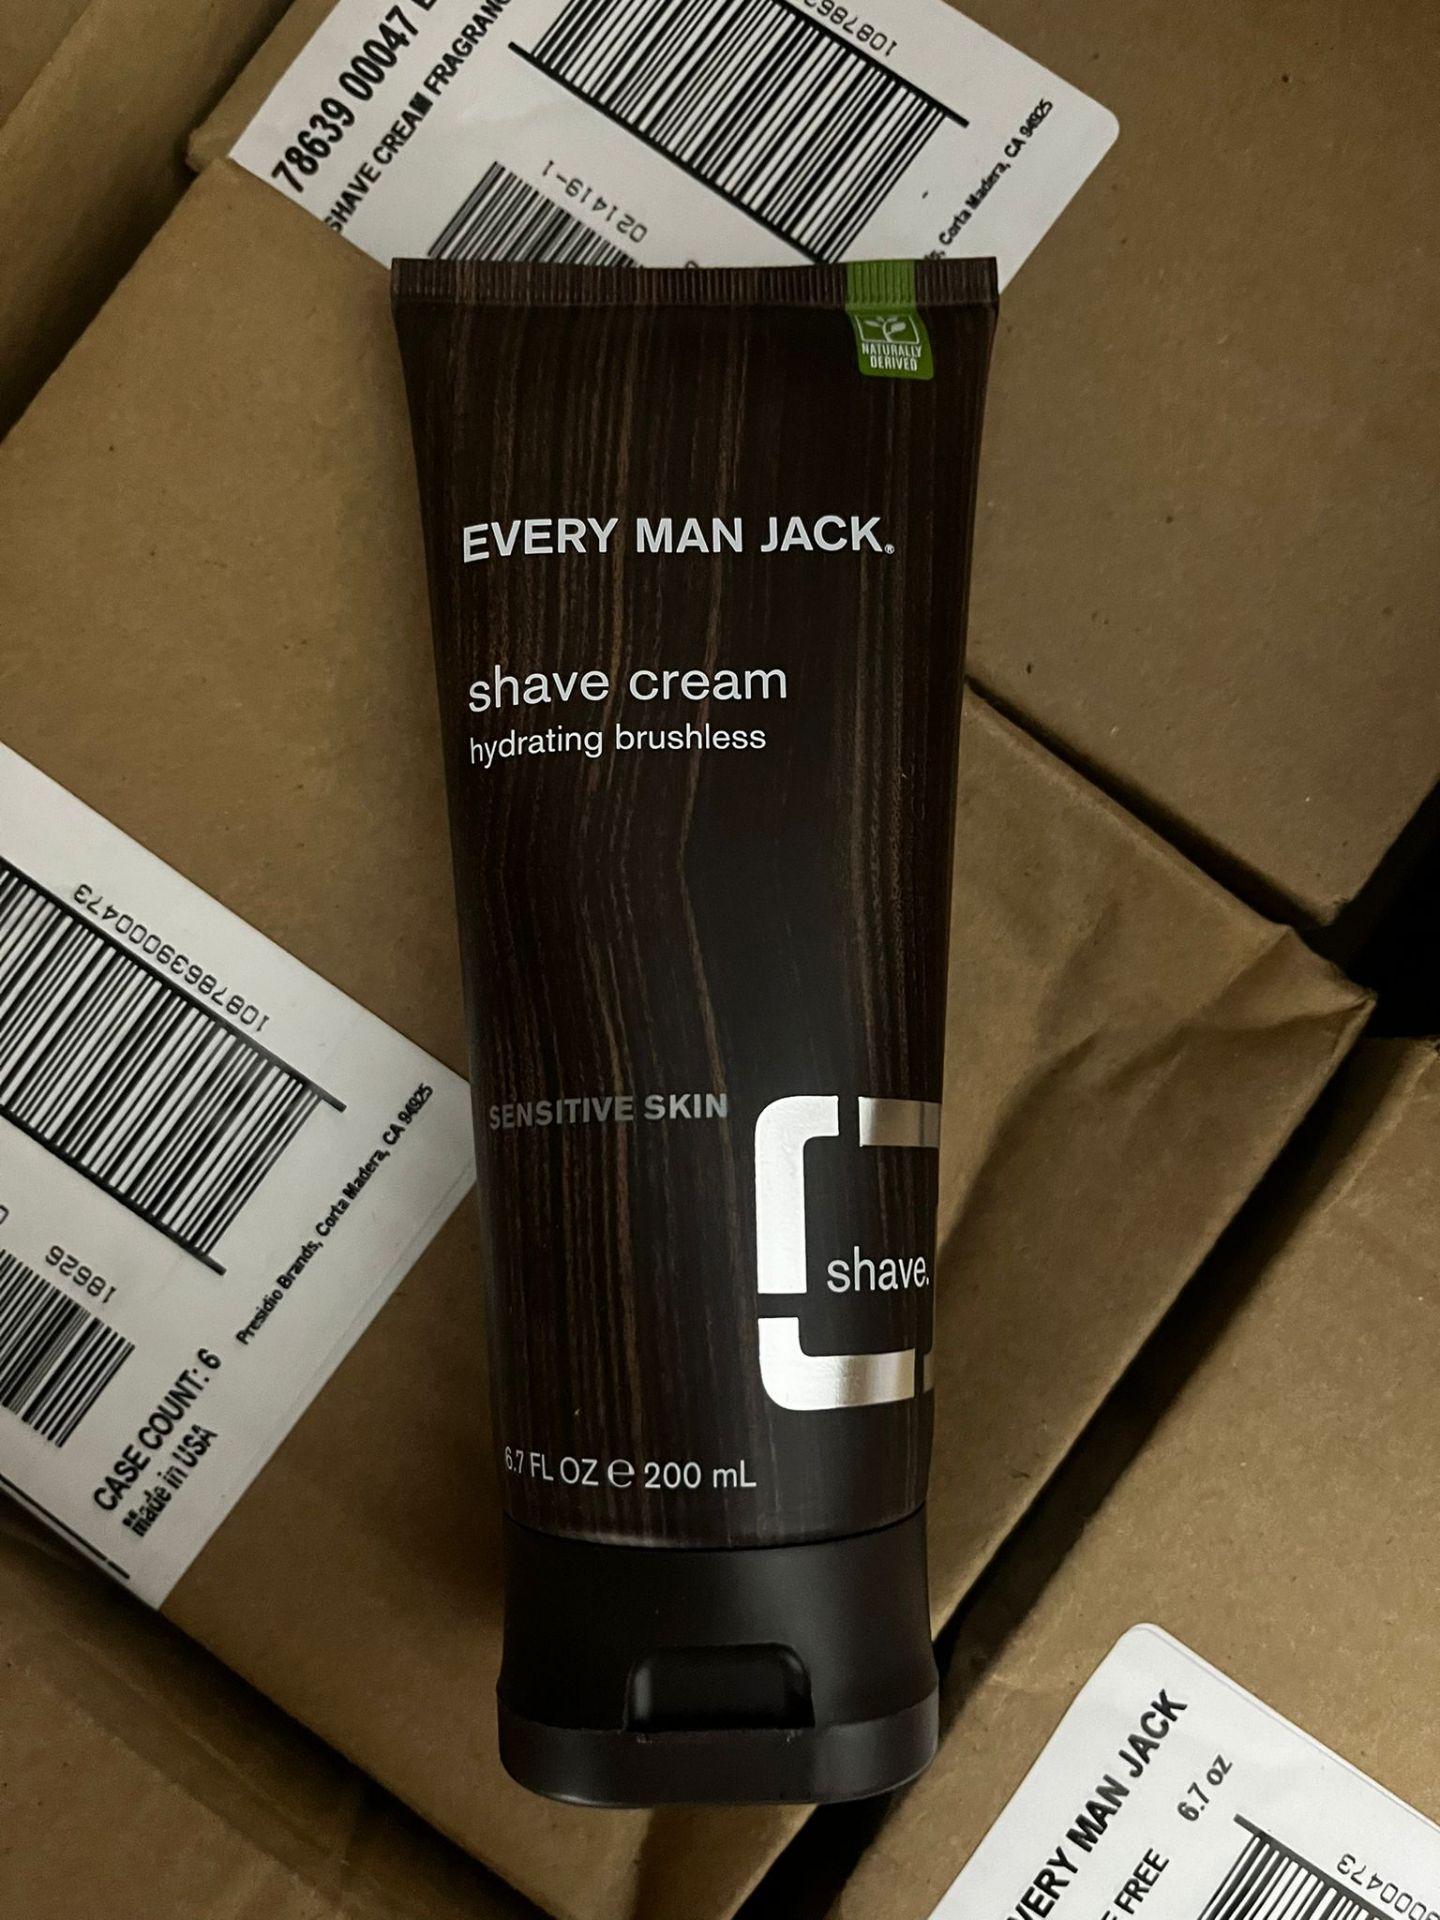 Every Man Jack Shave Cream x 60, Est Retail Value £2100